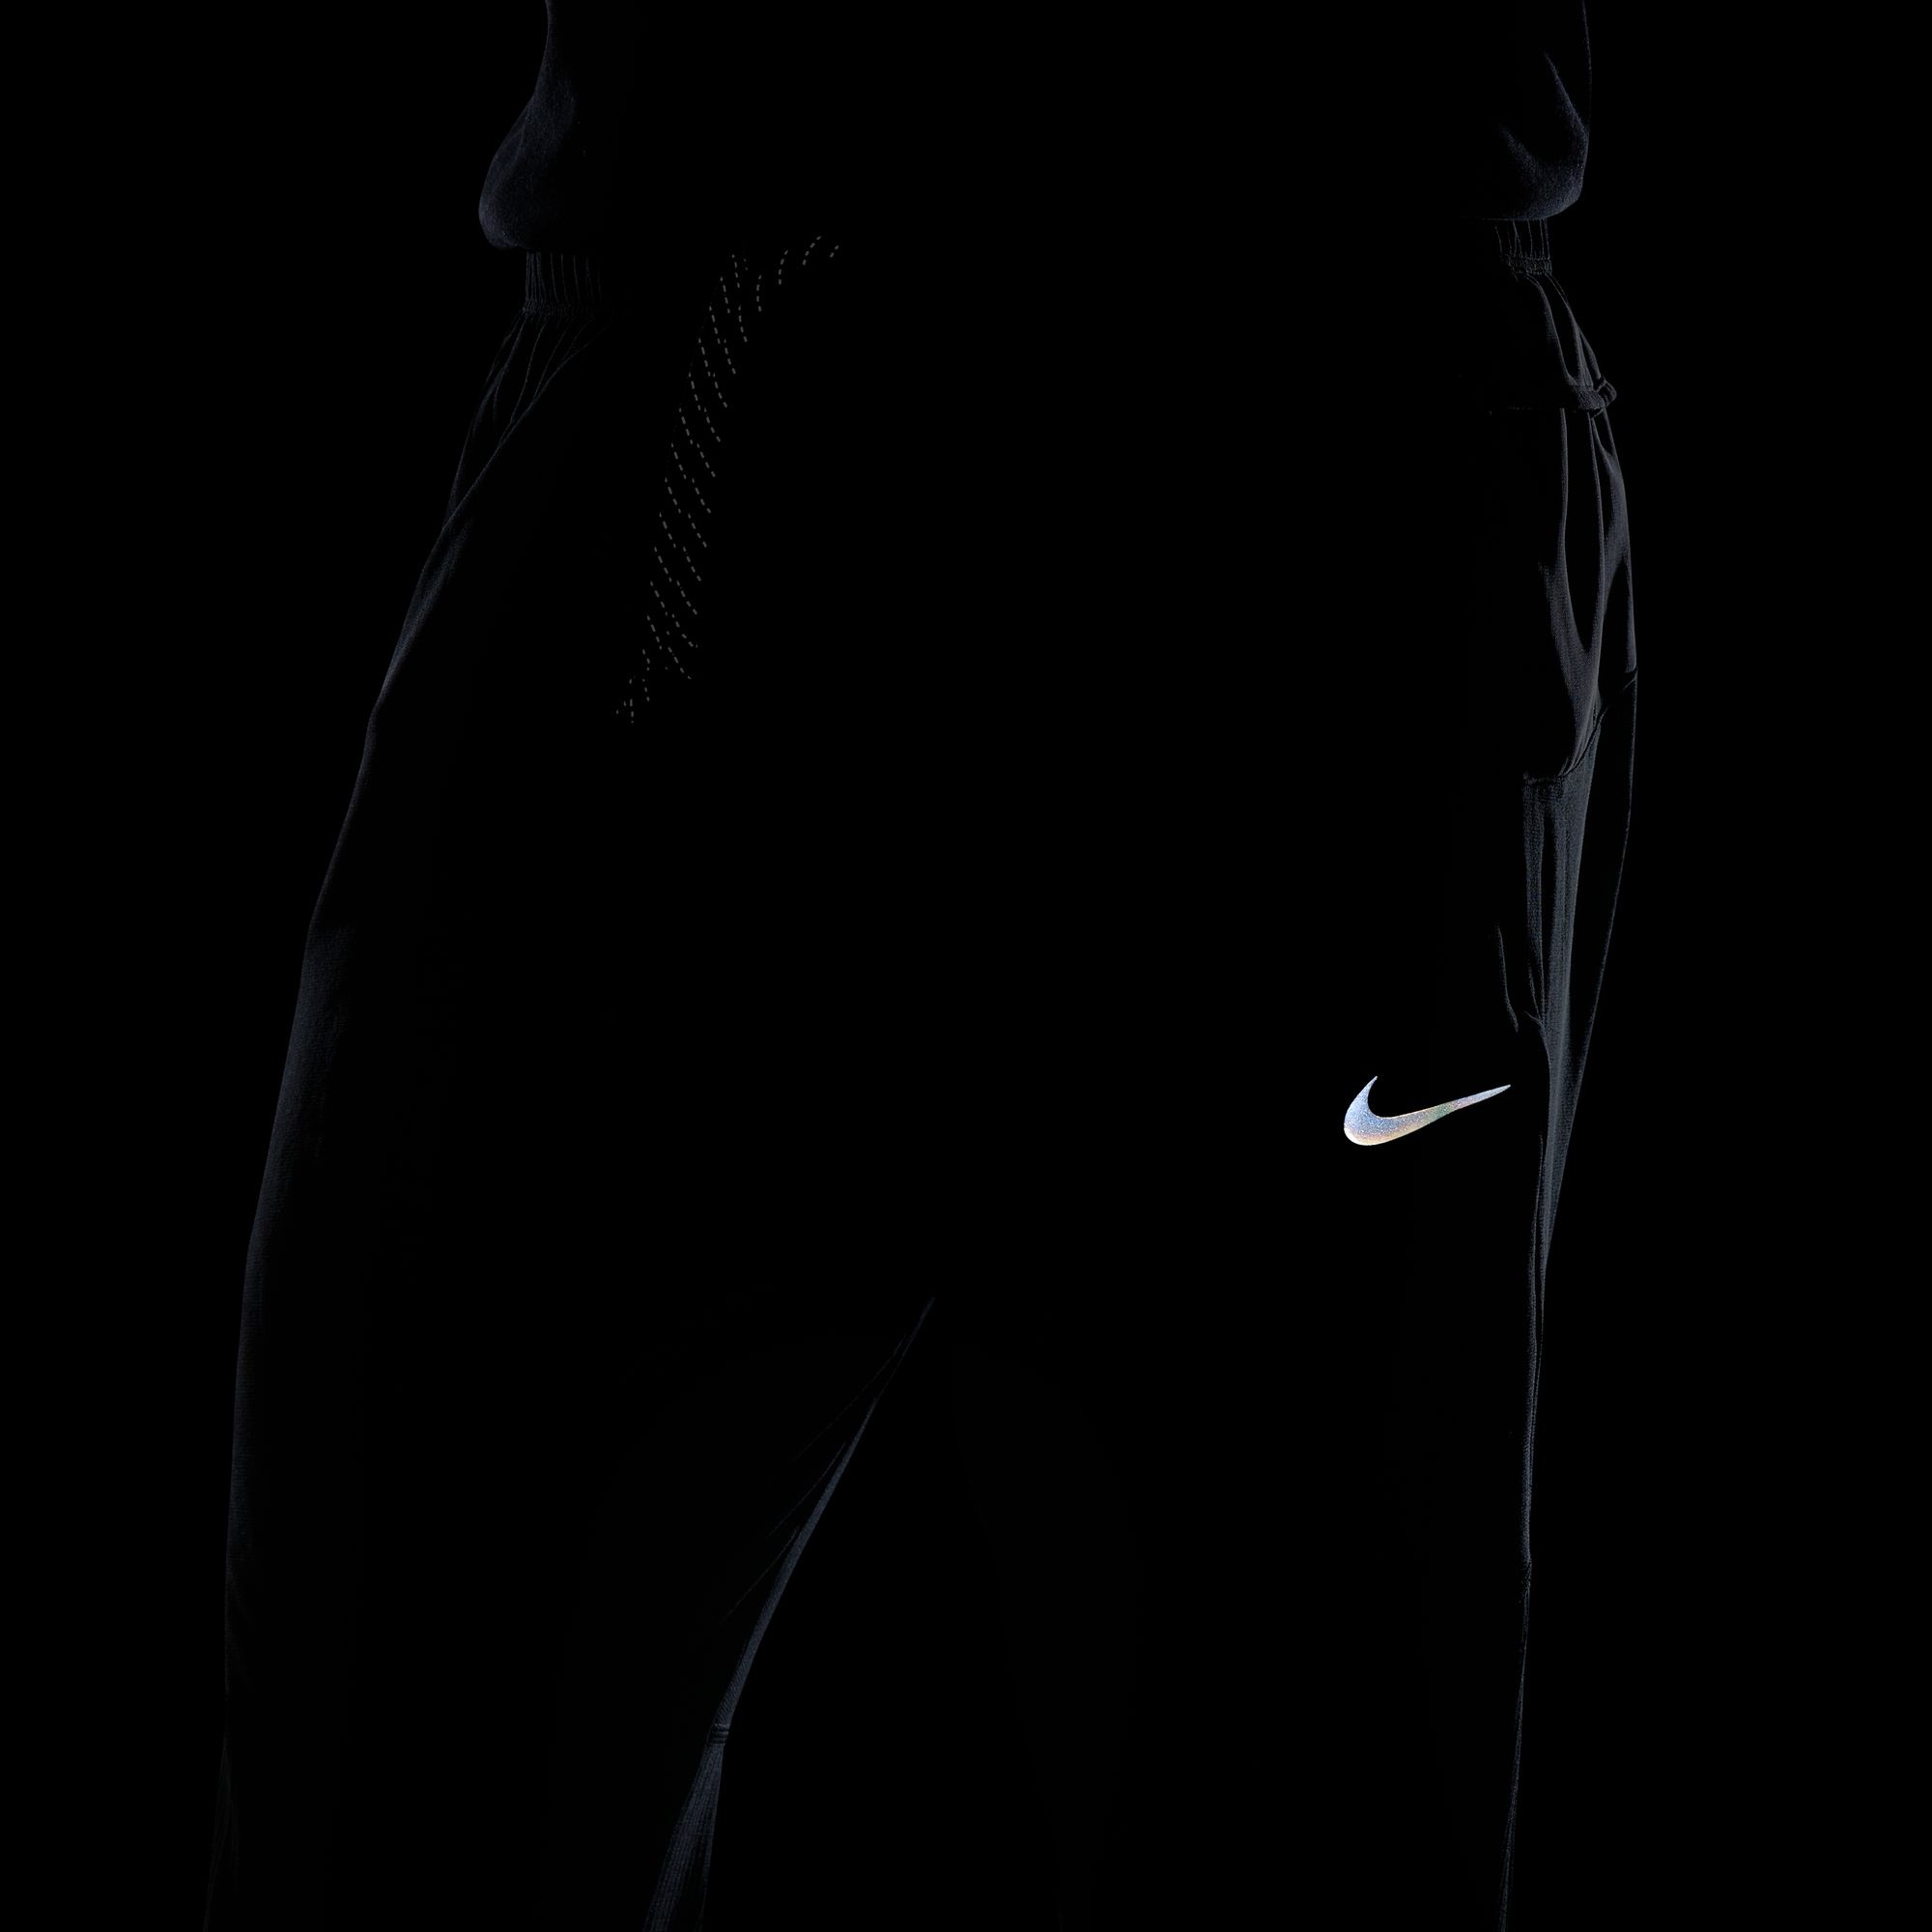 Nike Laufhose »DRI-FIT RUN DIVISION PHENOM MEN'S RUNNING PANTS«